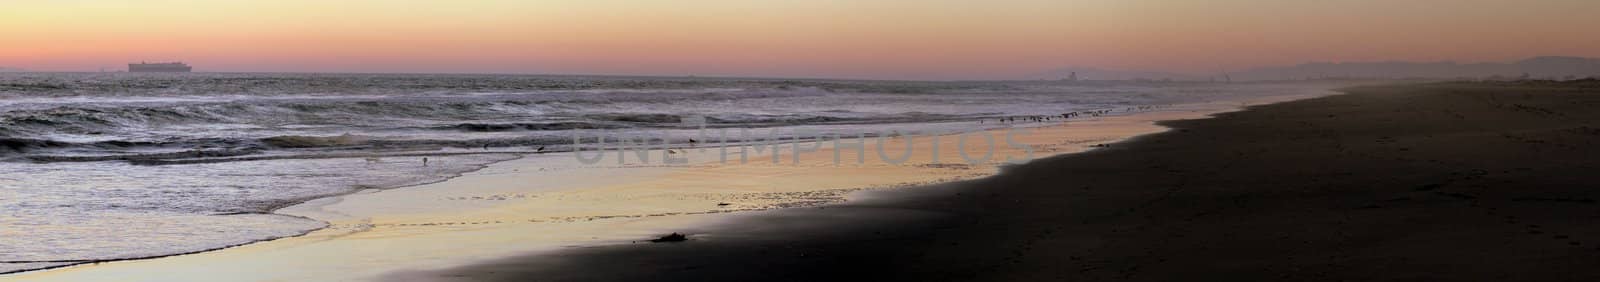 Beach Sunset Ormond Beach by hlehnerer